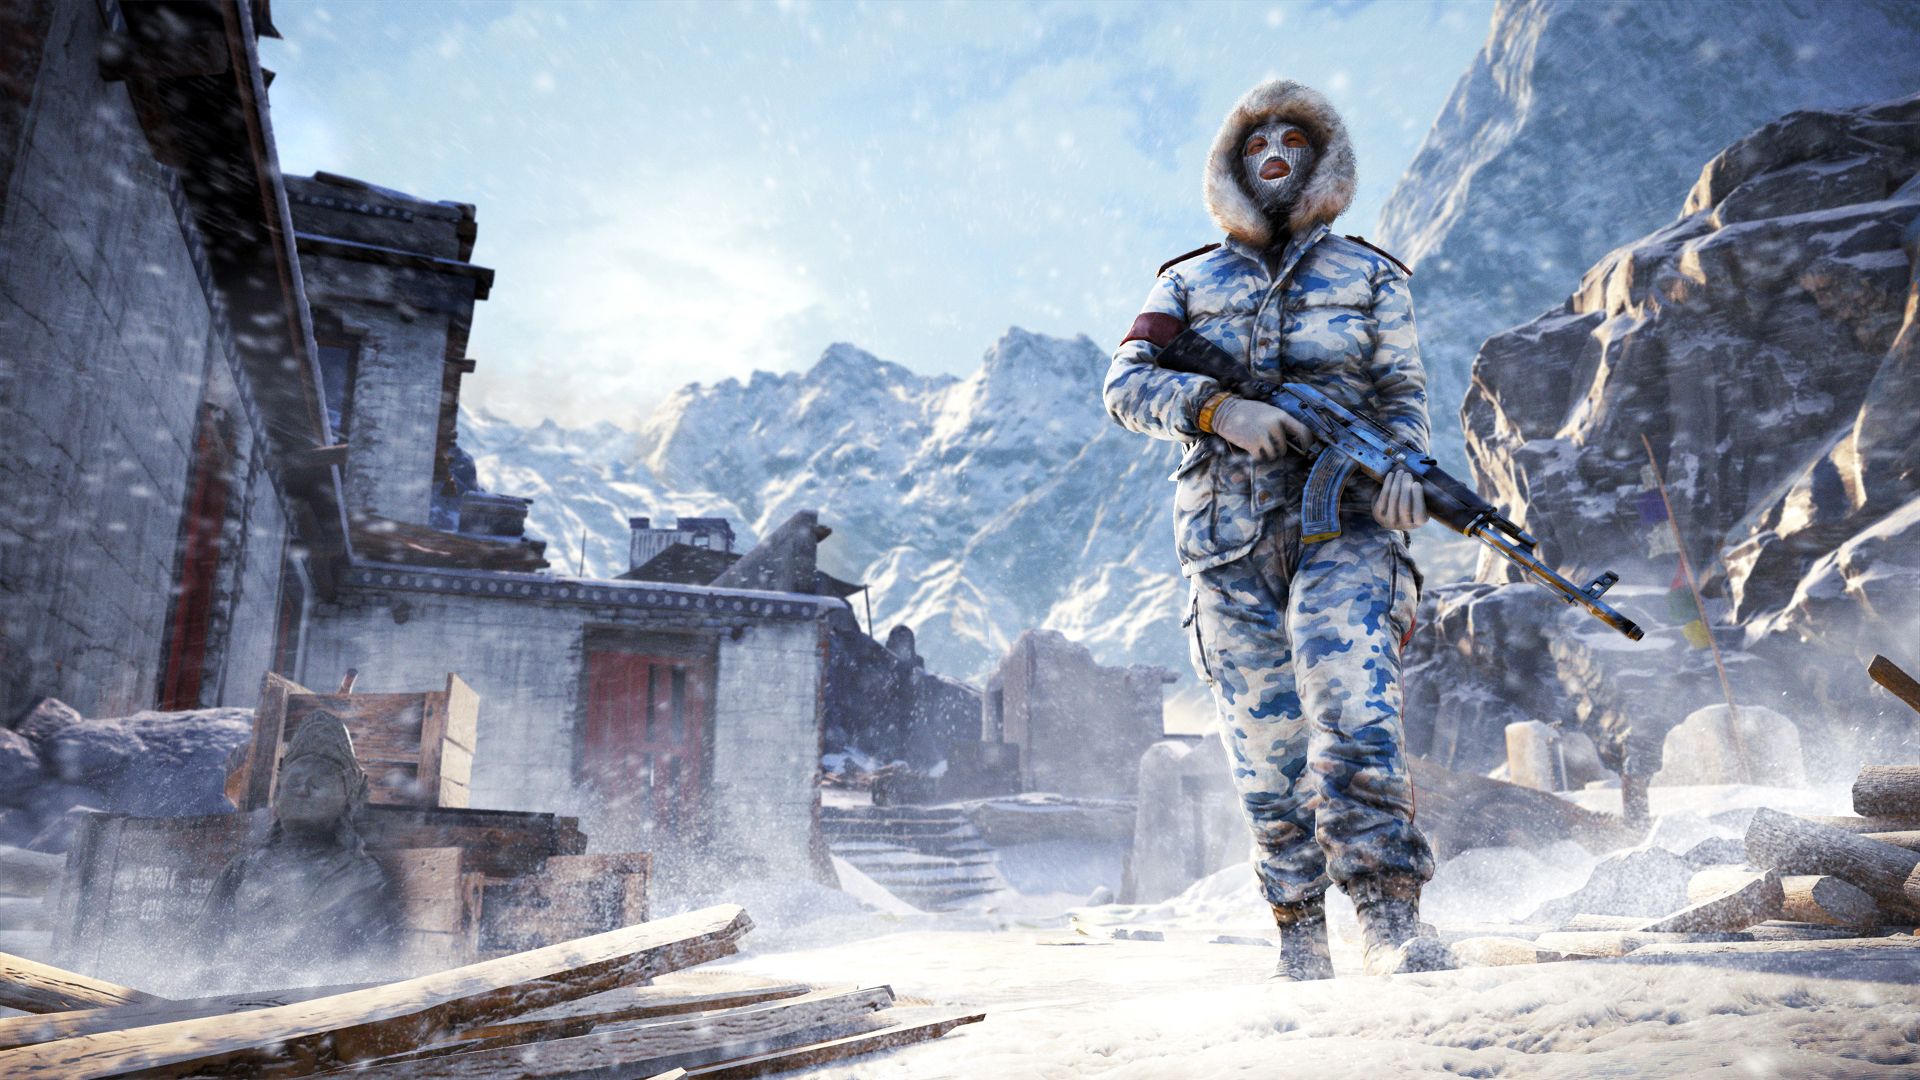 Snowy Scenery In Far Cry Kyrat Ubisoft Gdk